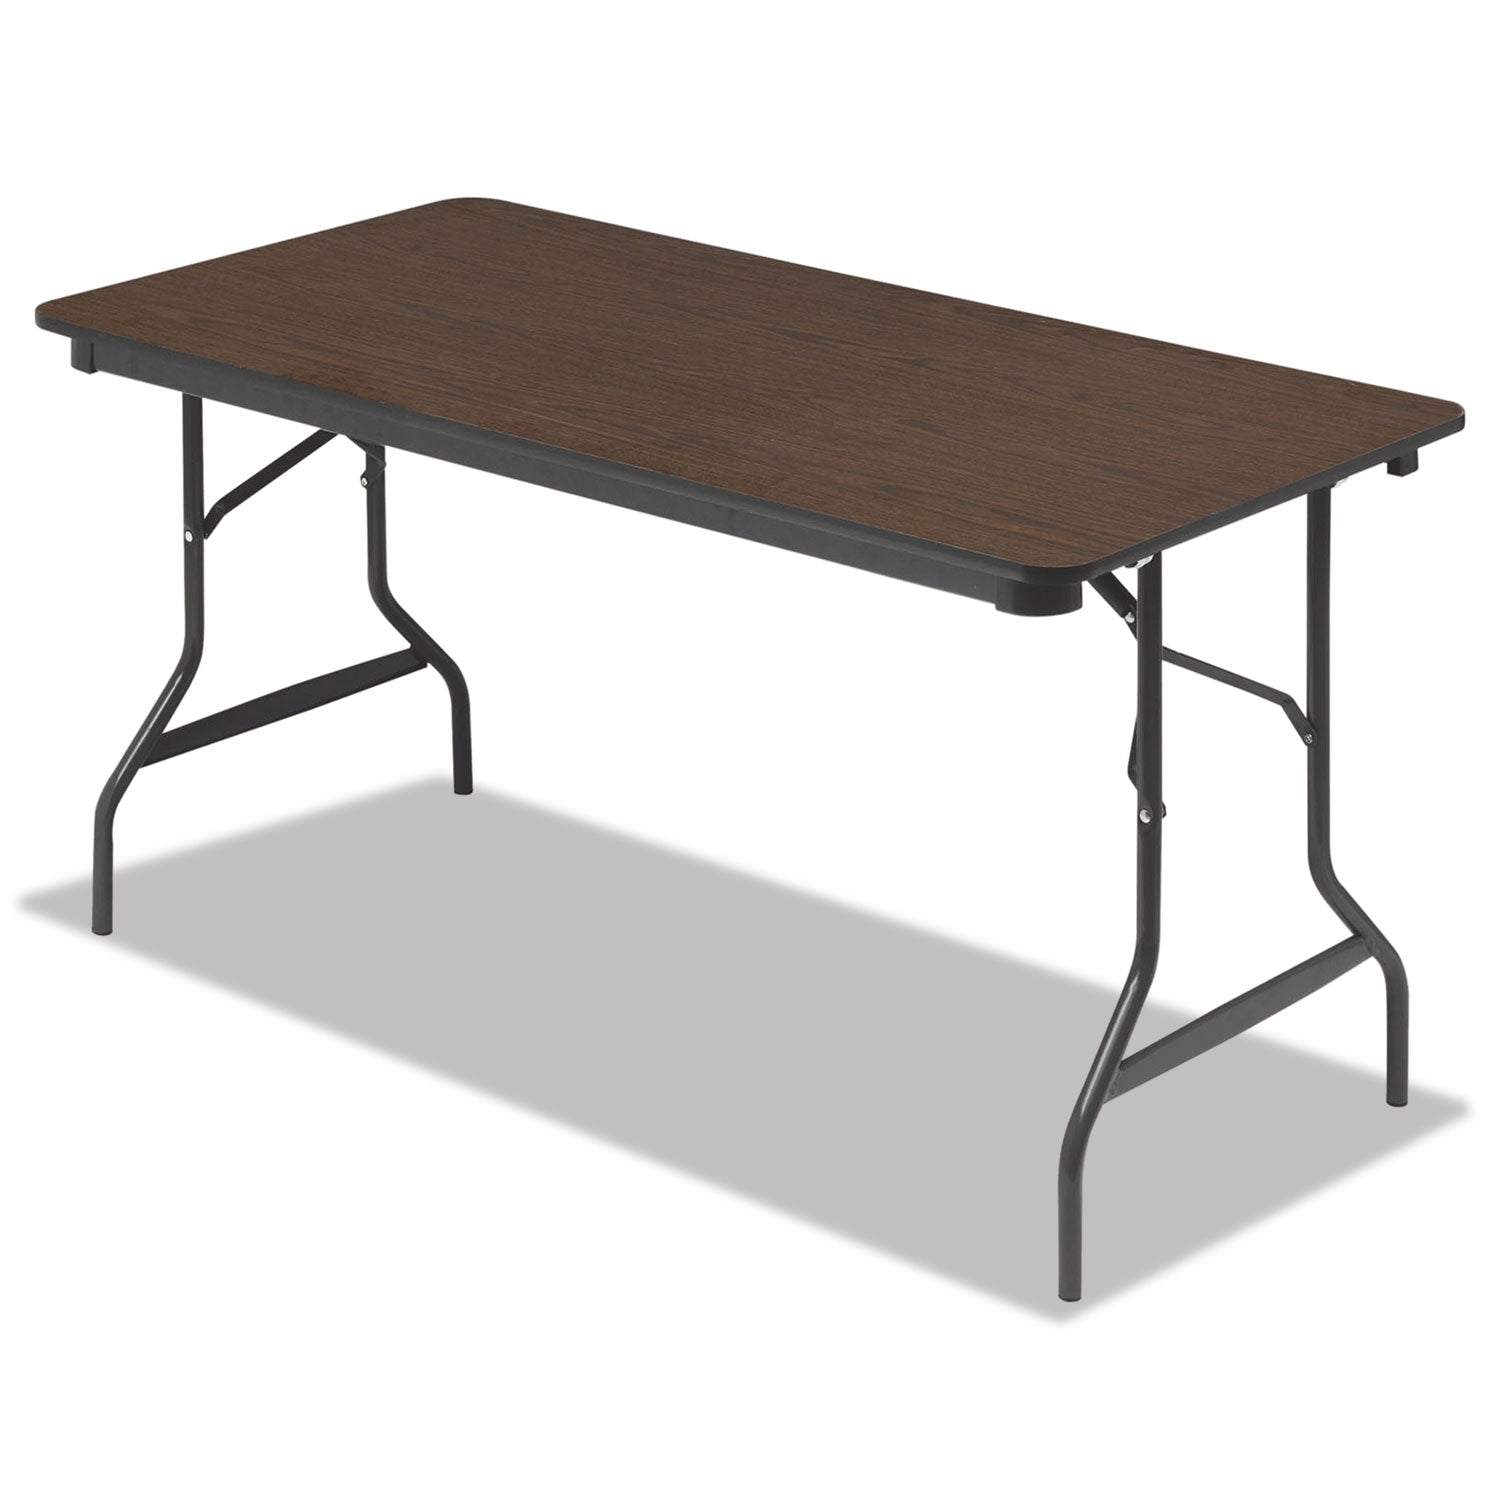 OfficeWorks Classic Wood-Laminate Folding Table, Curved Legs, Rectangular, 60" x 30" x 29", Walnut - 